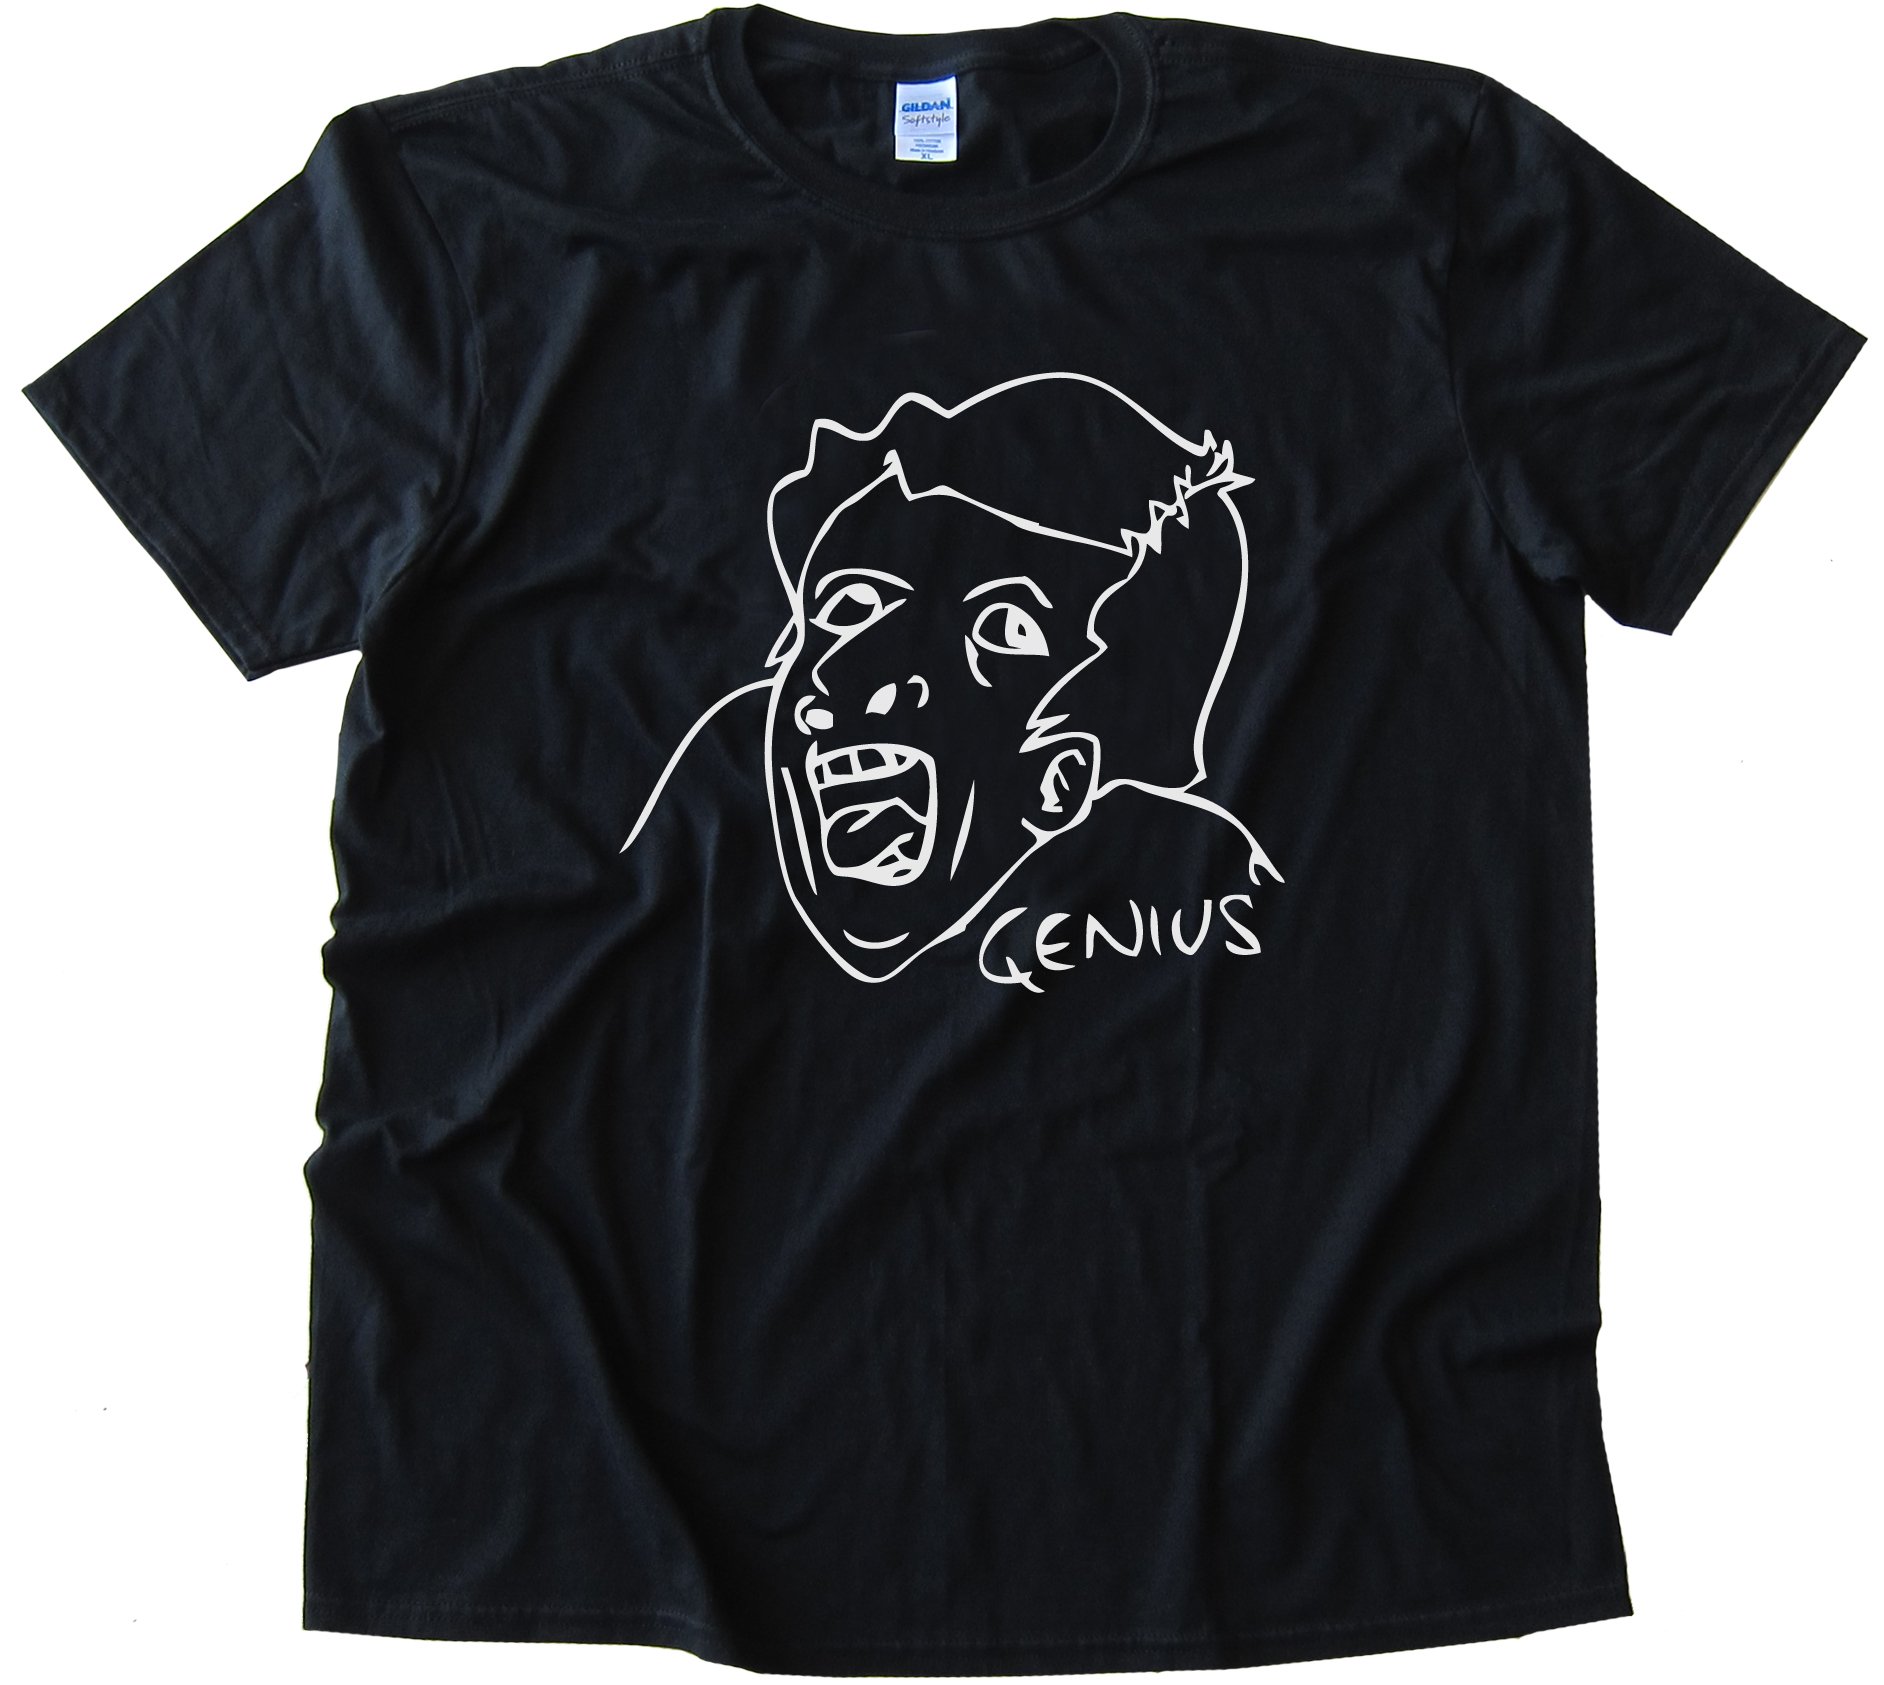 Genius Rage Comic Face Tee Shirt